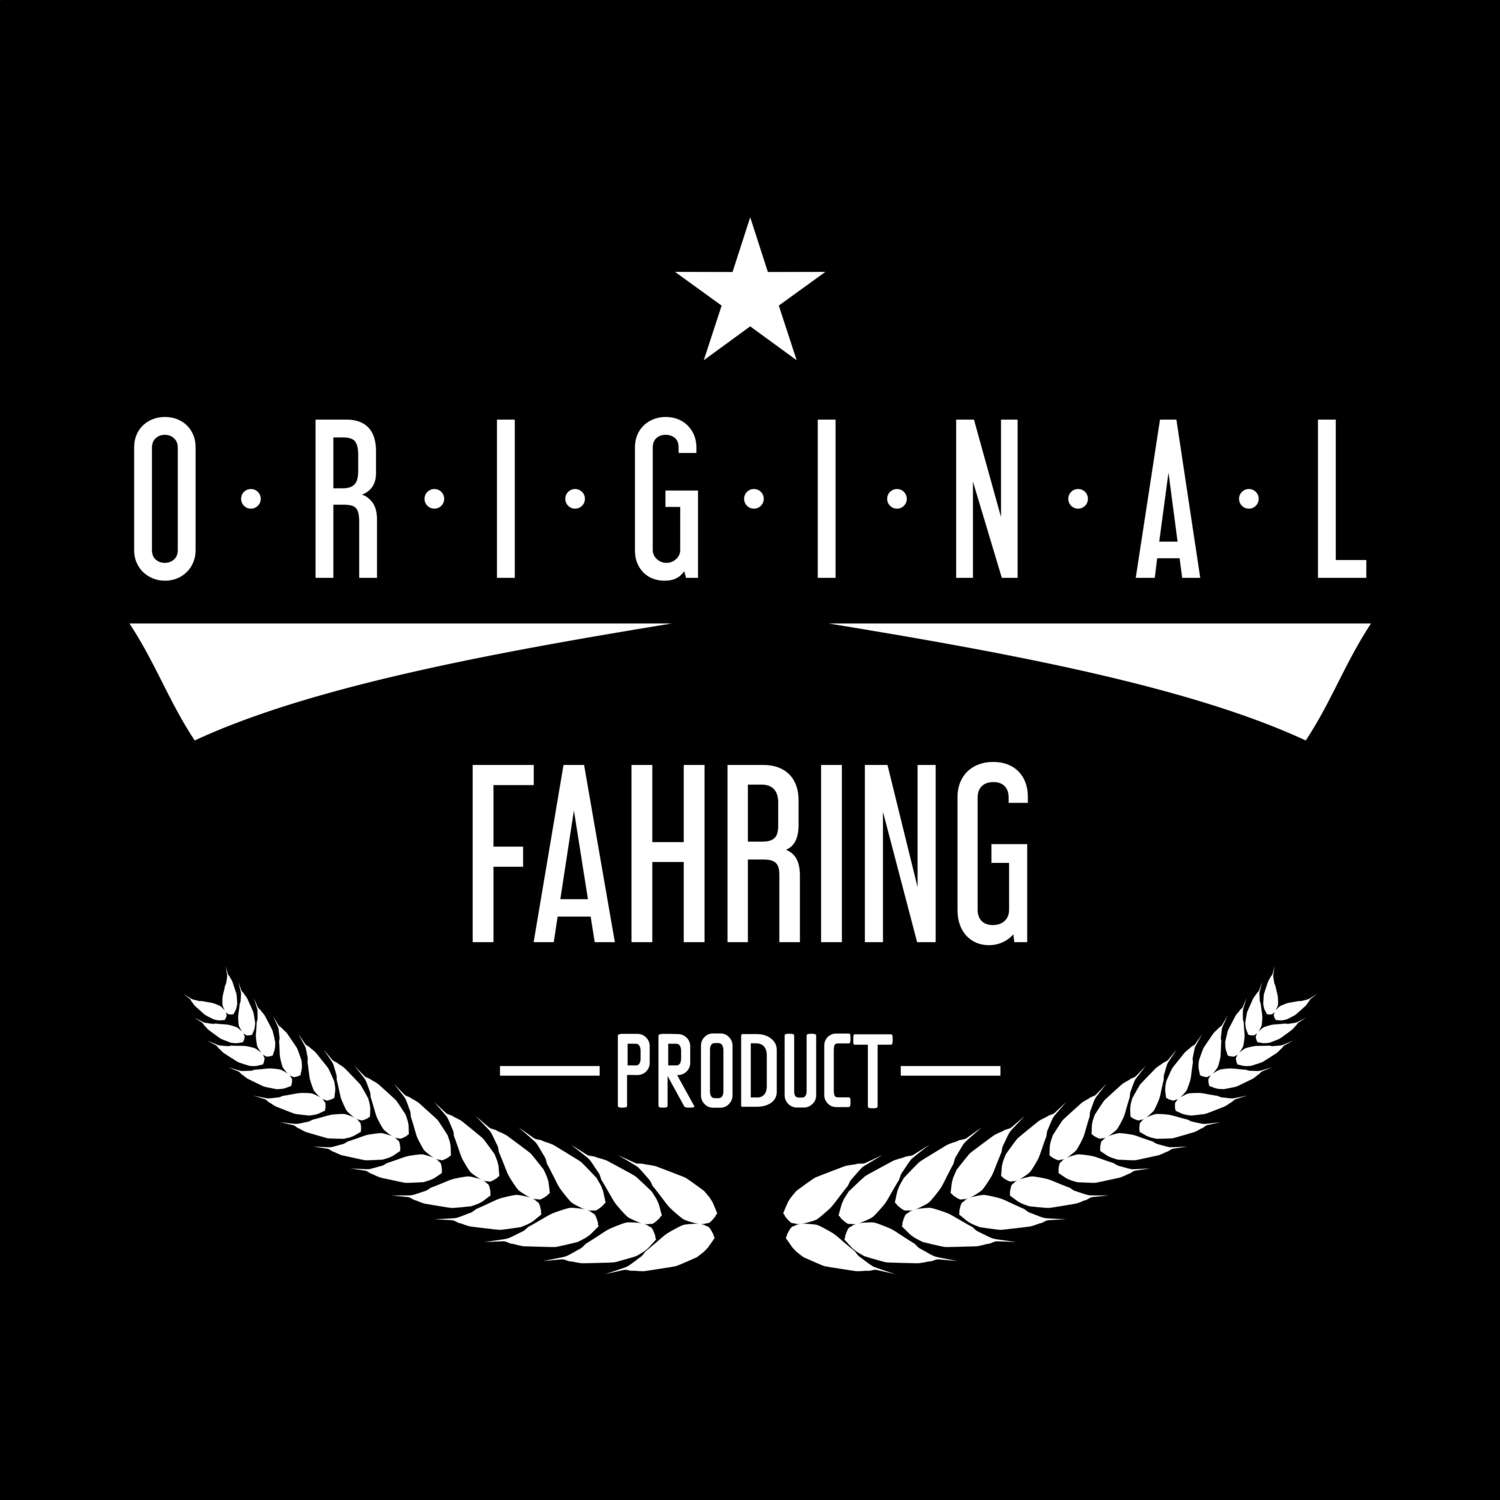 Fahring T-Shirt »Original Product«